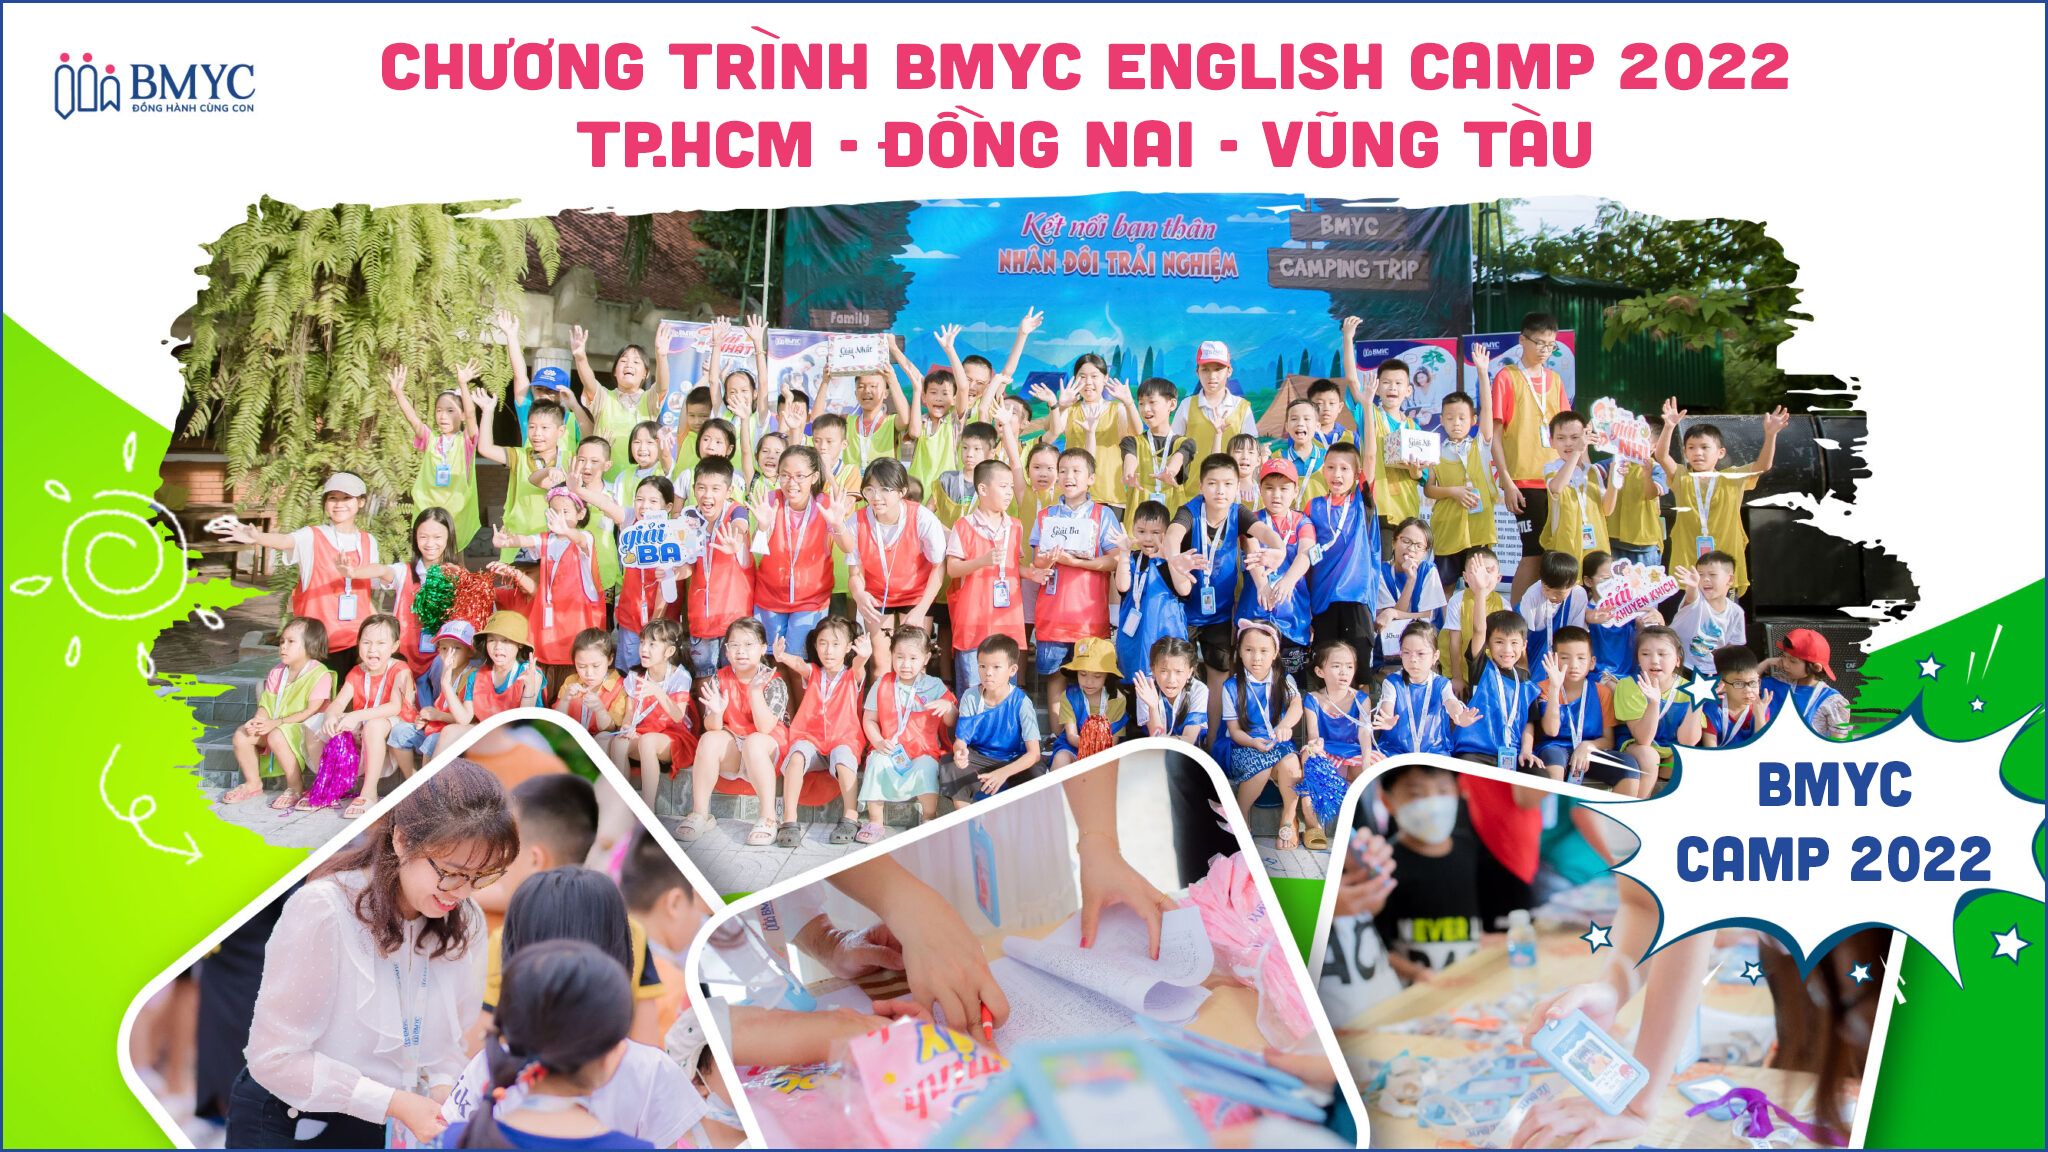 bmyc camp 2022 tphcm